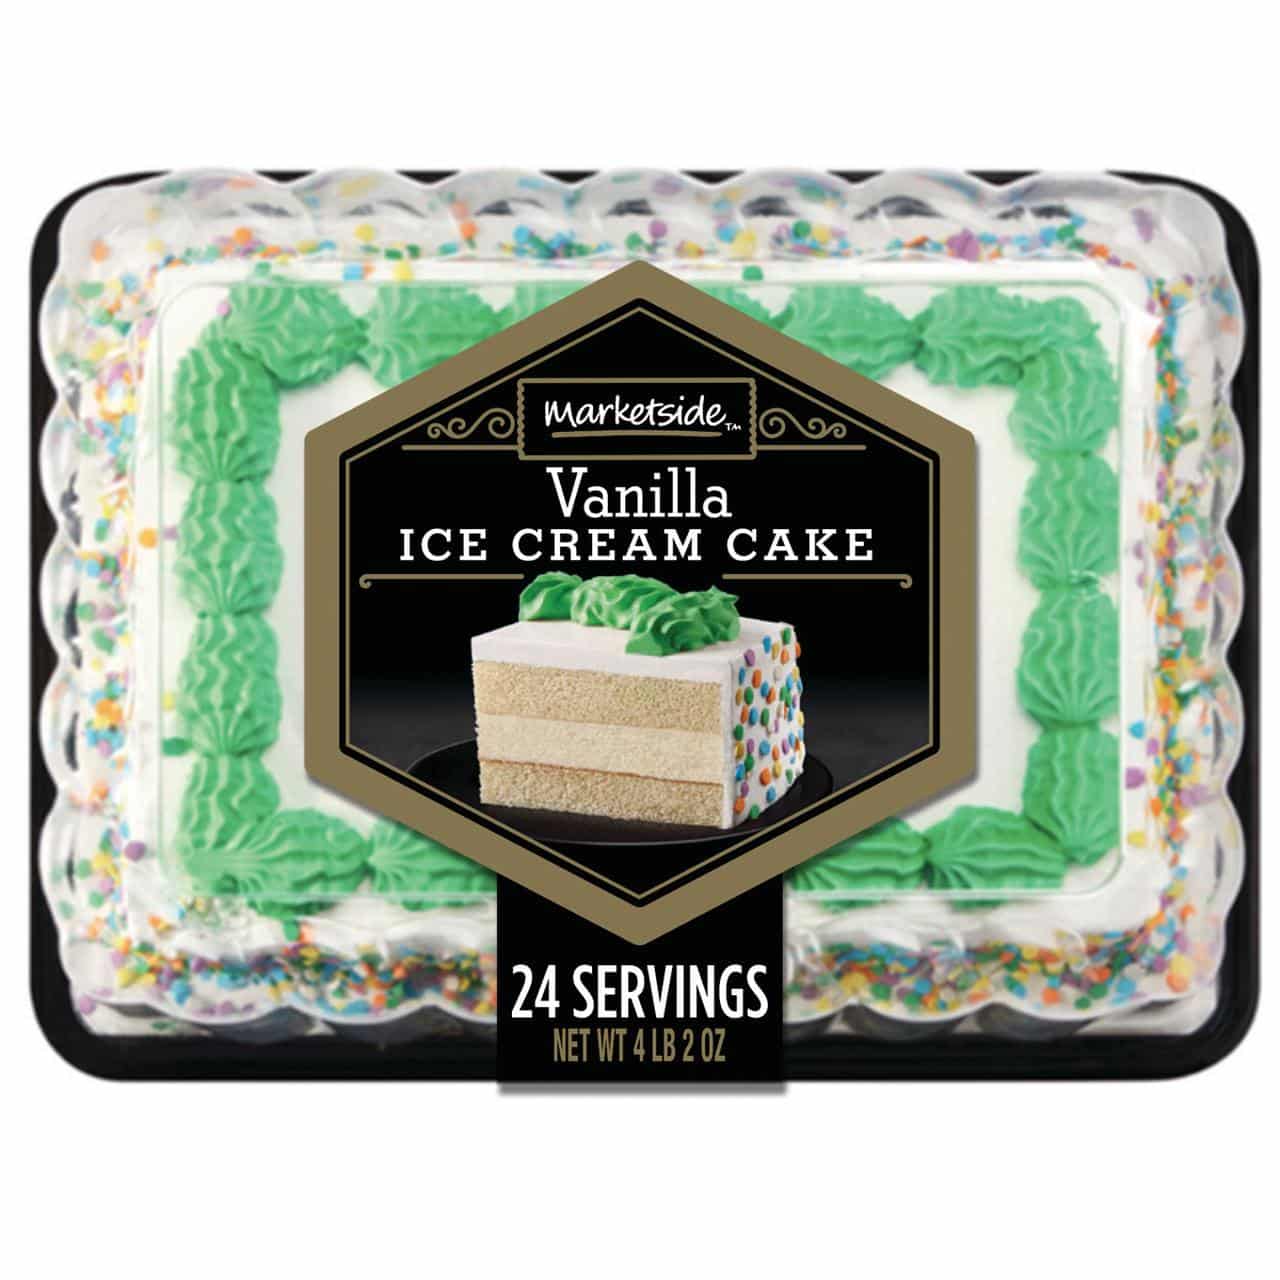 Marketside Vanilla Ice Cream Cake, 2 oz